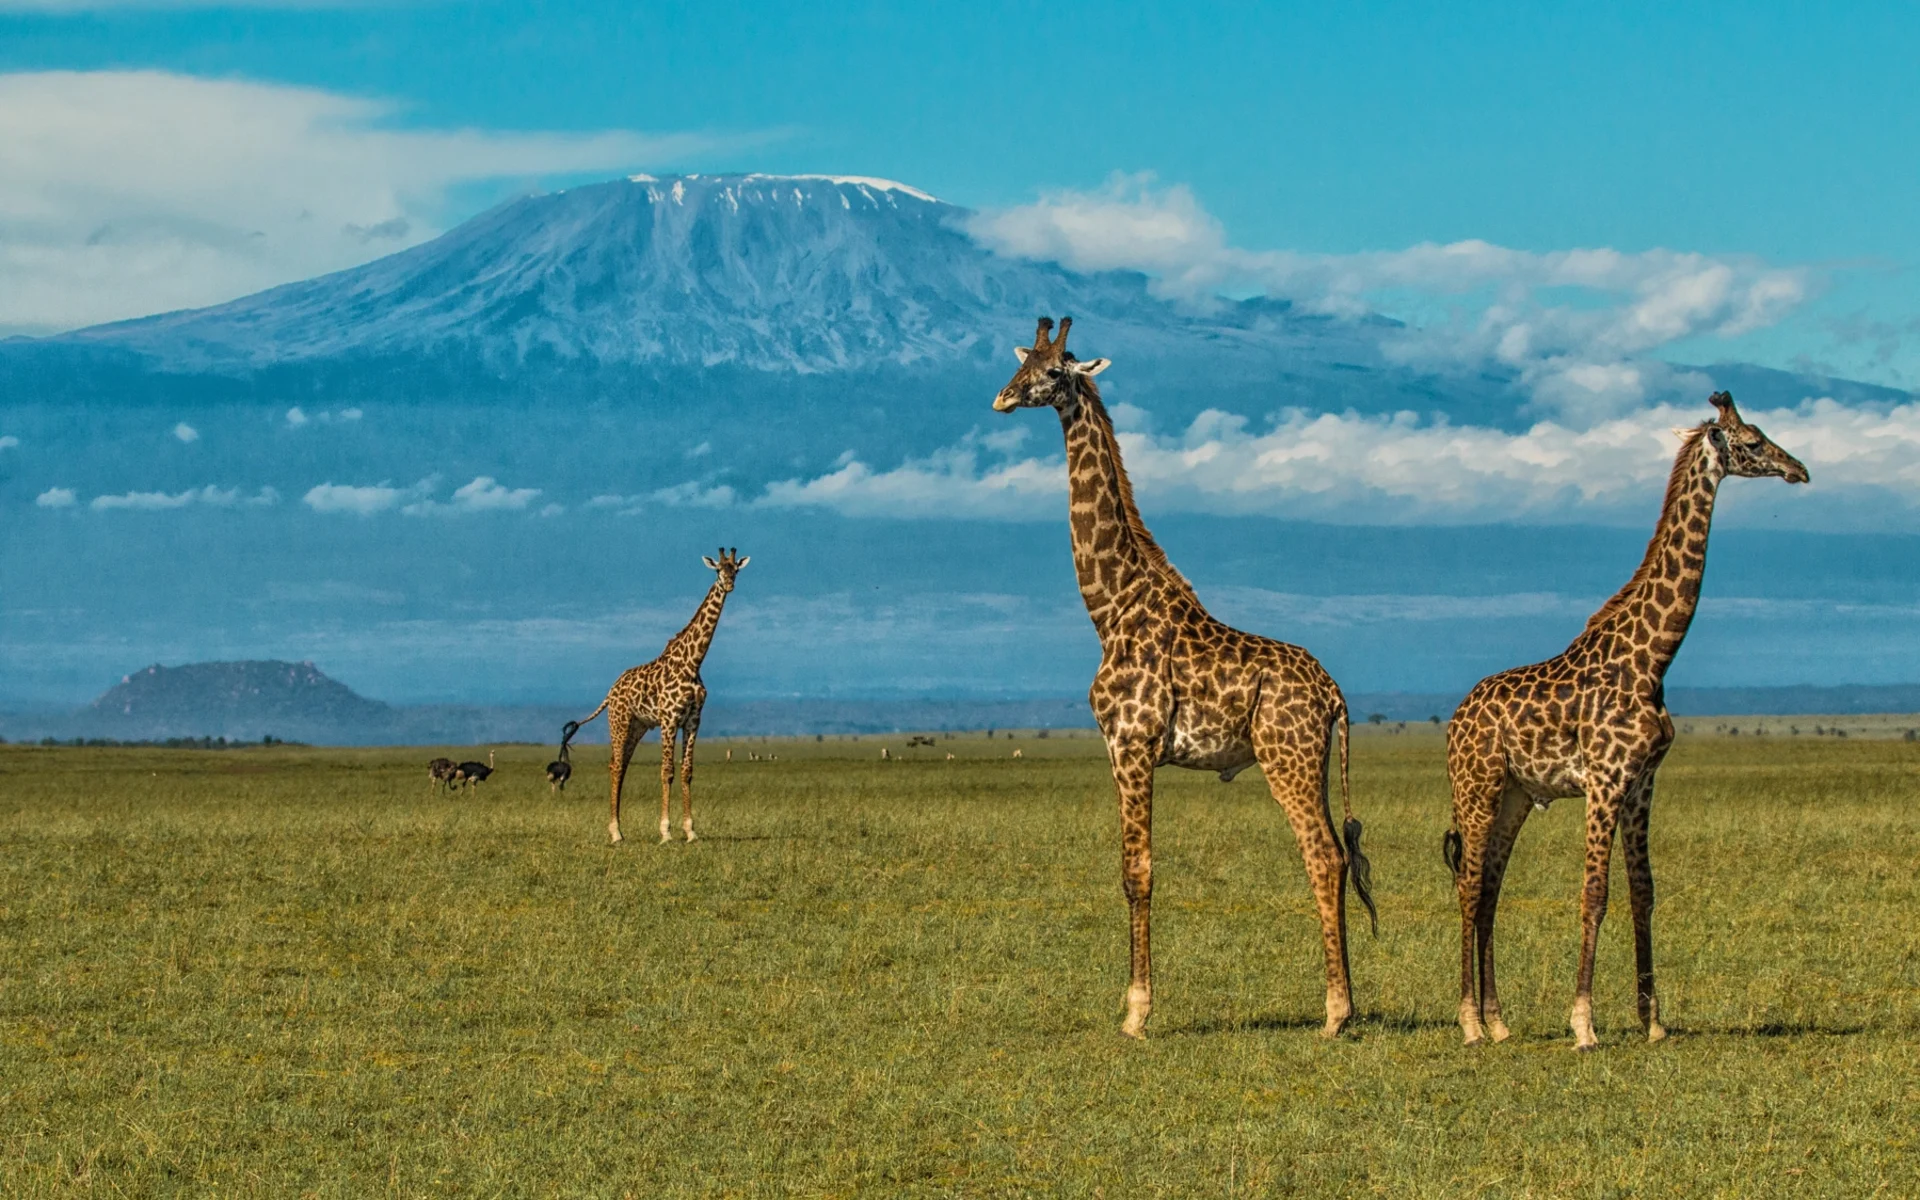 Three giraffes stand ahead of Ol Donoyo Sabuk's gigantic peak during daytime